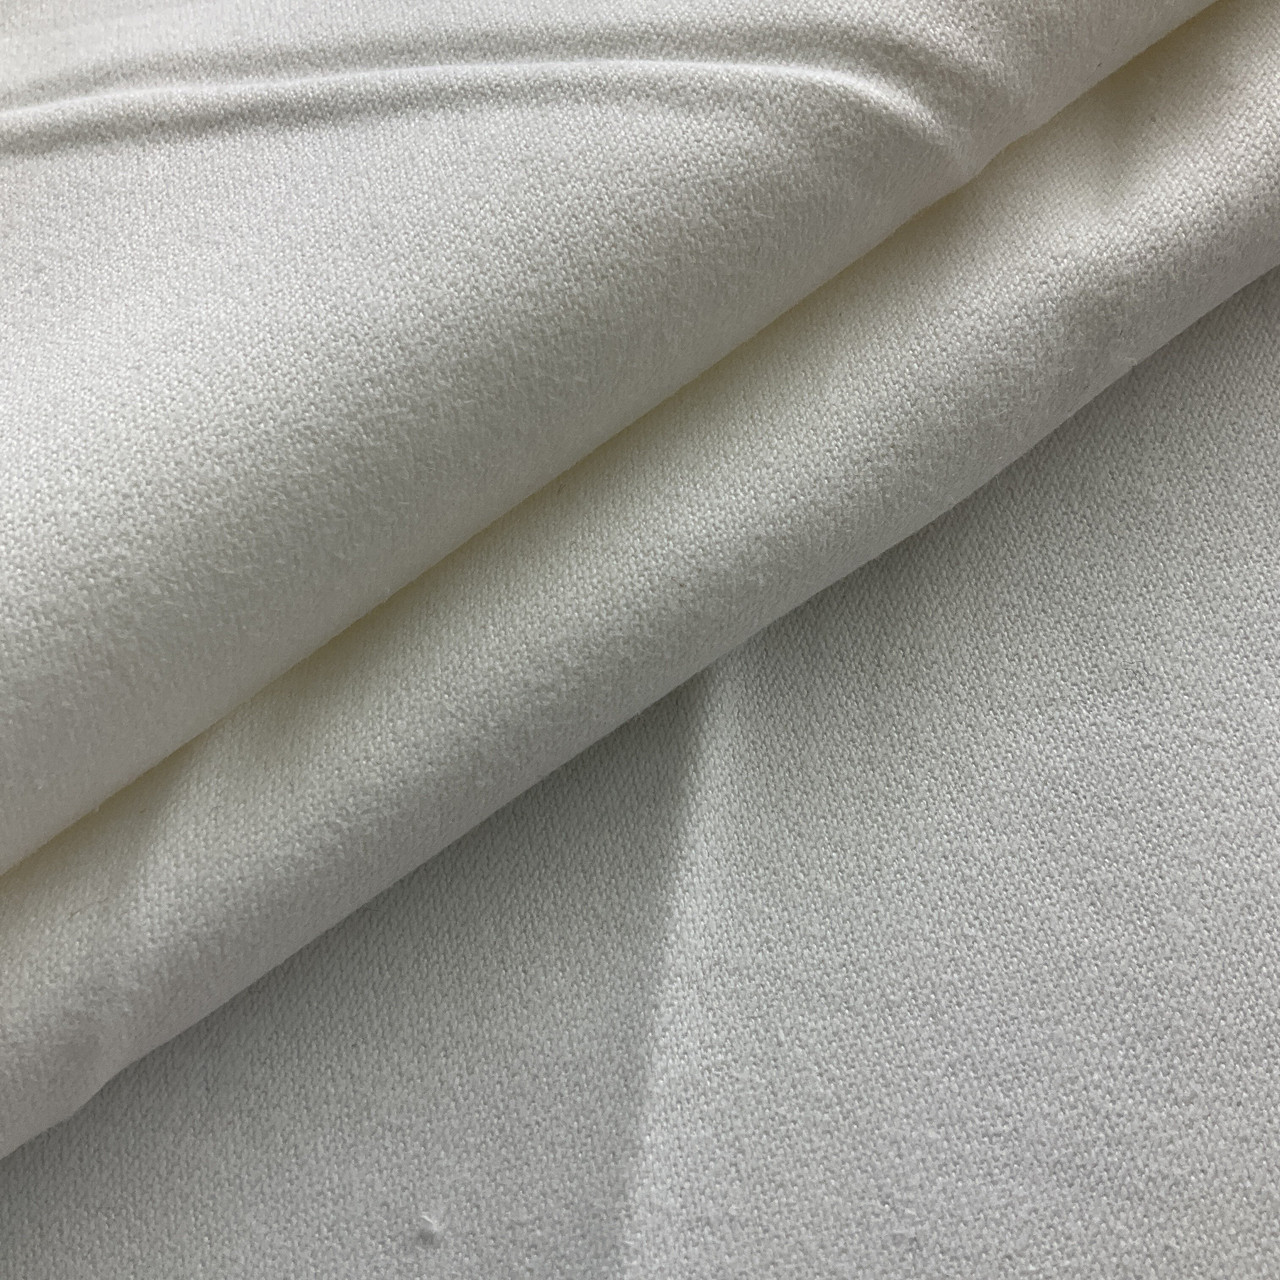 Natural Cotton Linen Fabric, Solid Color Hemp Jute Burlap Fabric